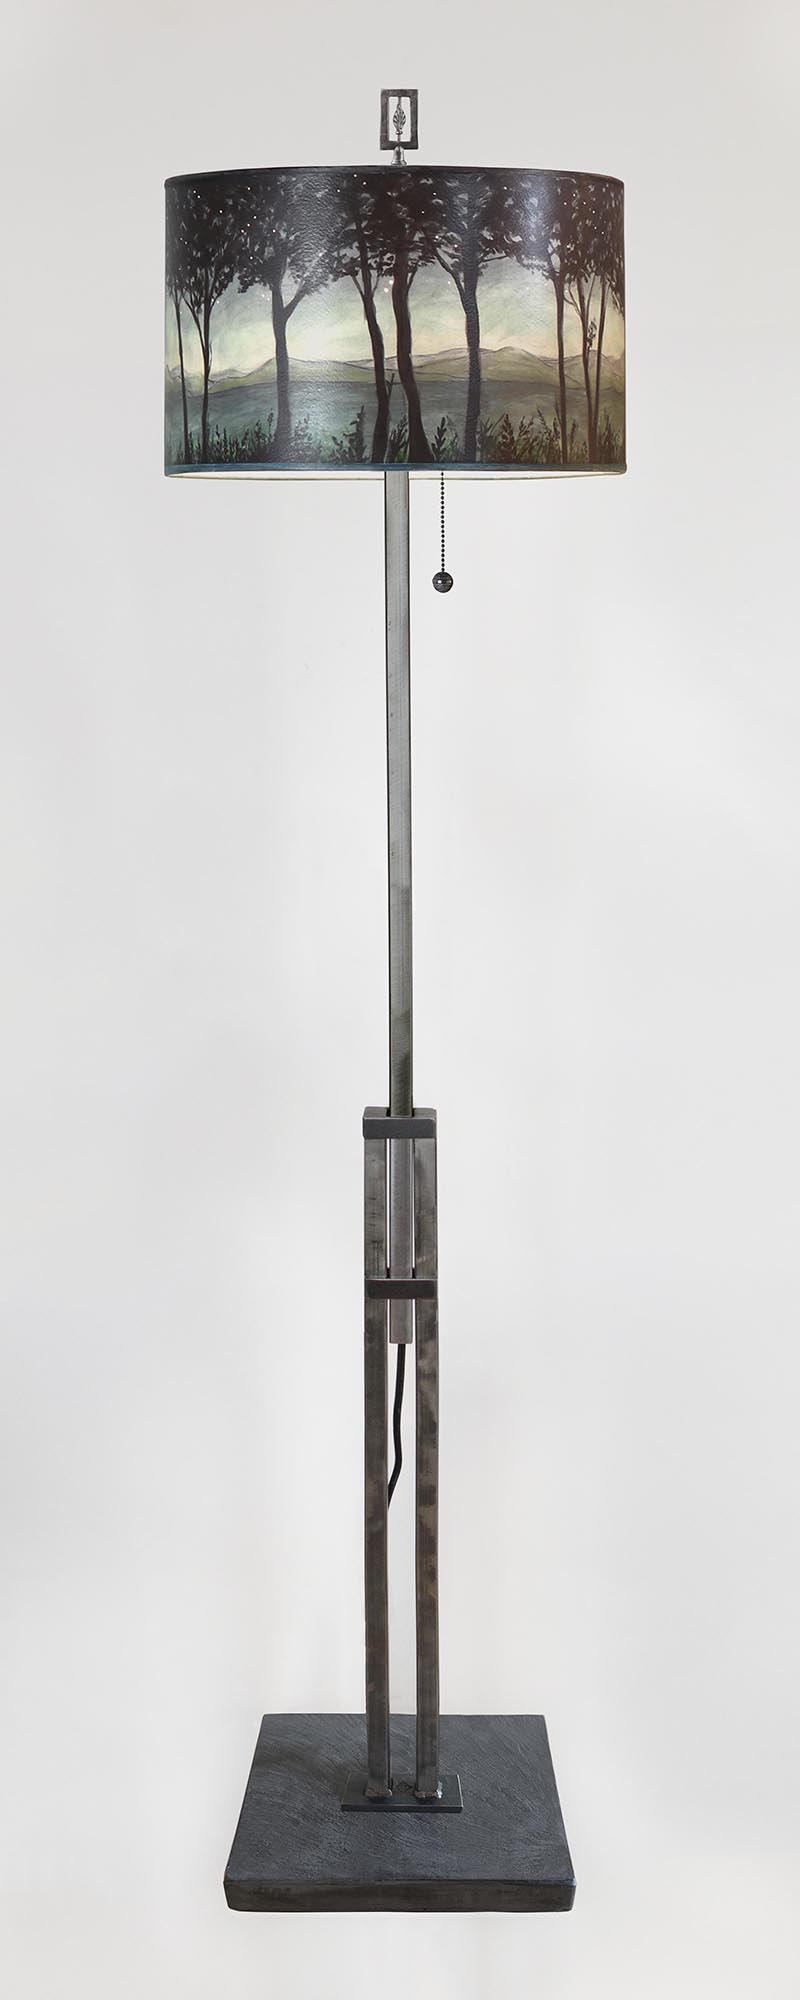 Adjustable-Height Steel Floor Lamp with Large Drum Shade in Twilight